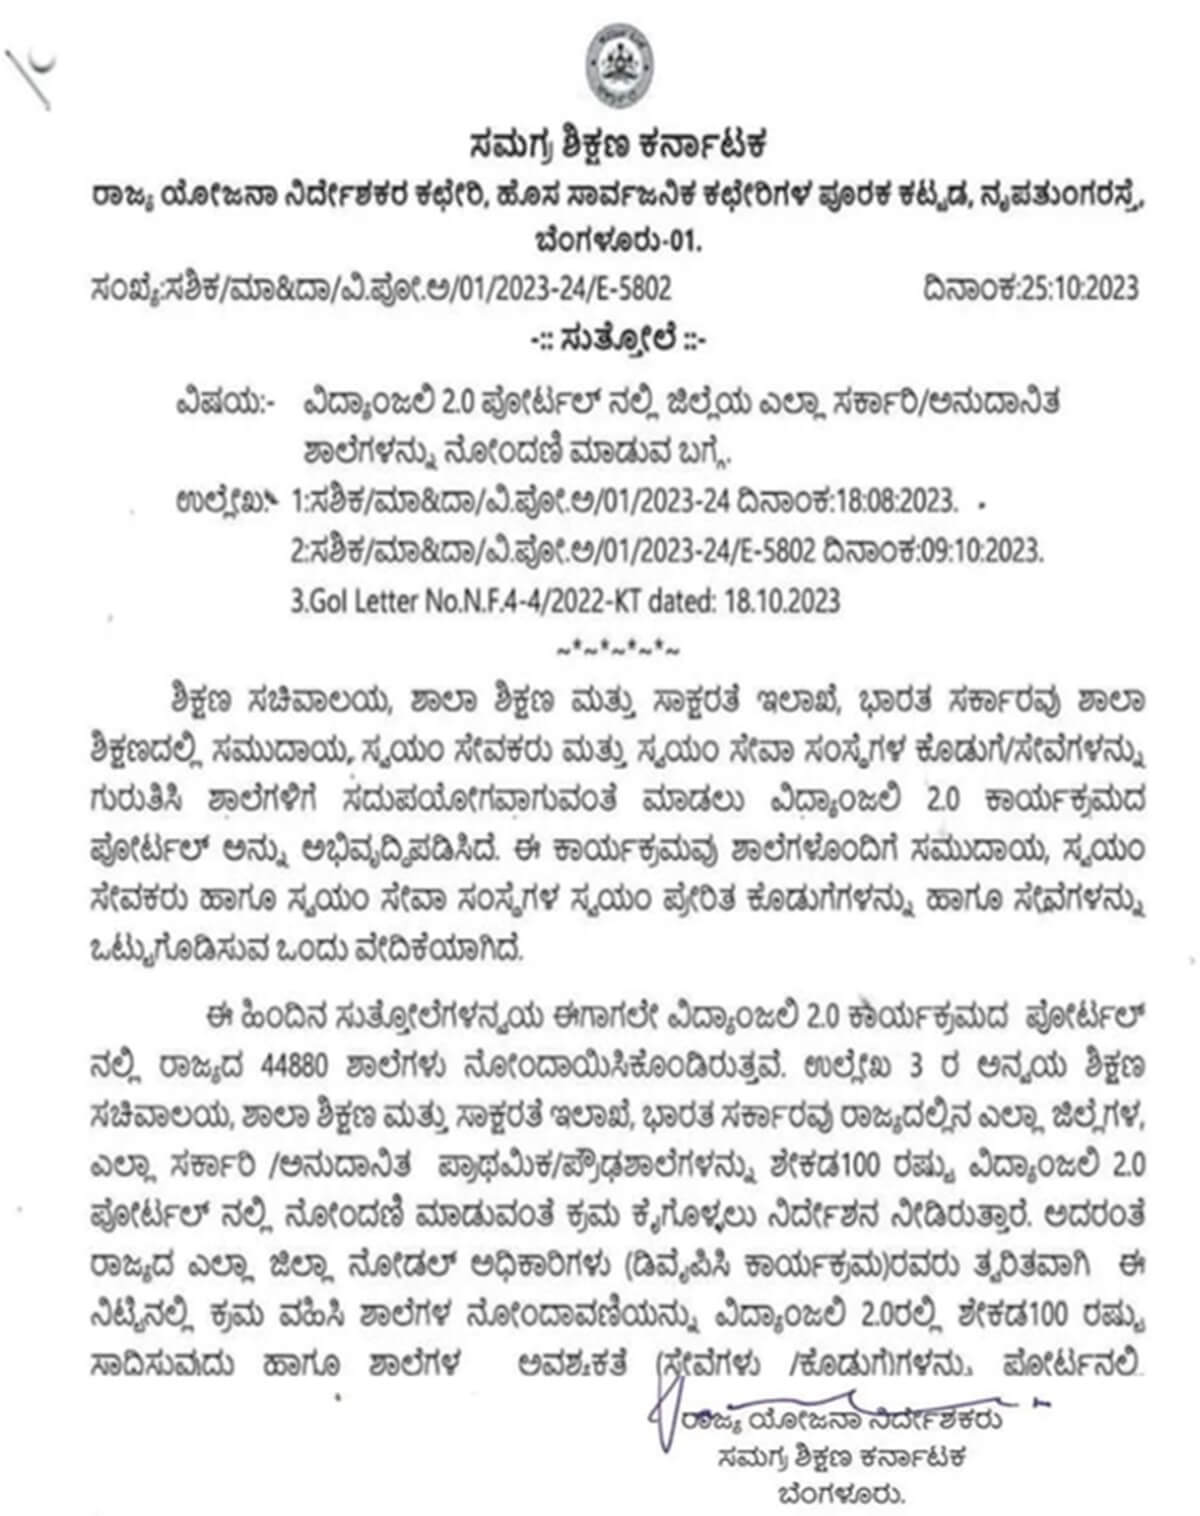 Karnataka Government new rules for schools, Registration on Vidyanjali 2.0 portal is mandatory 